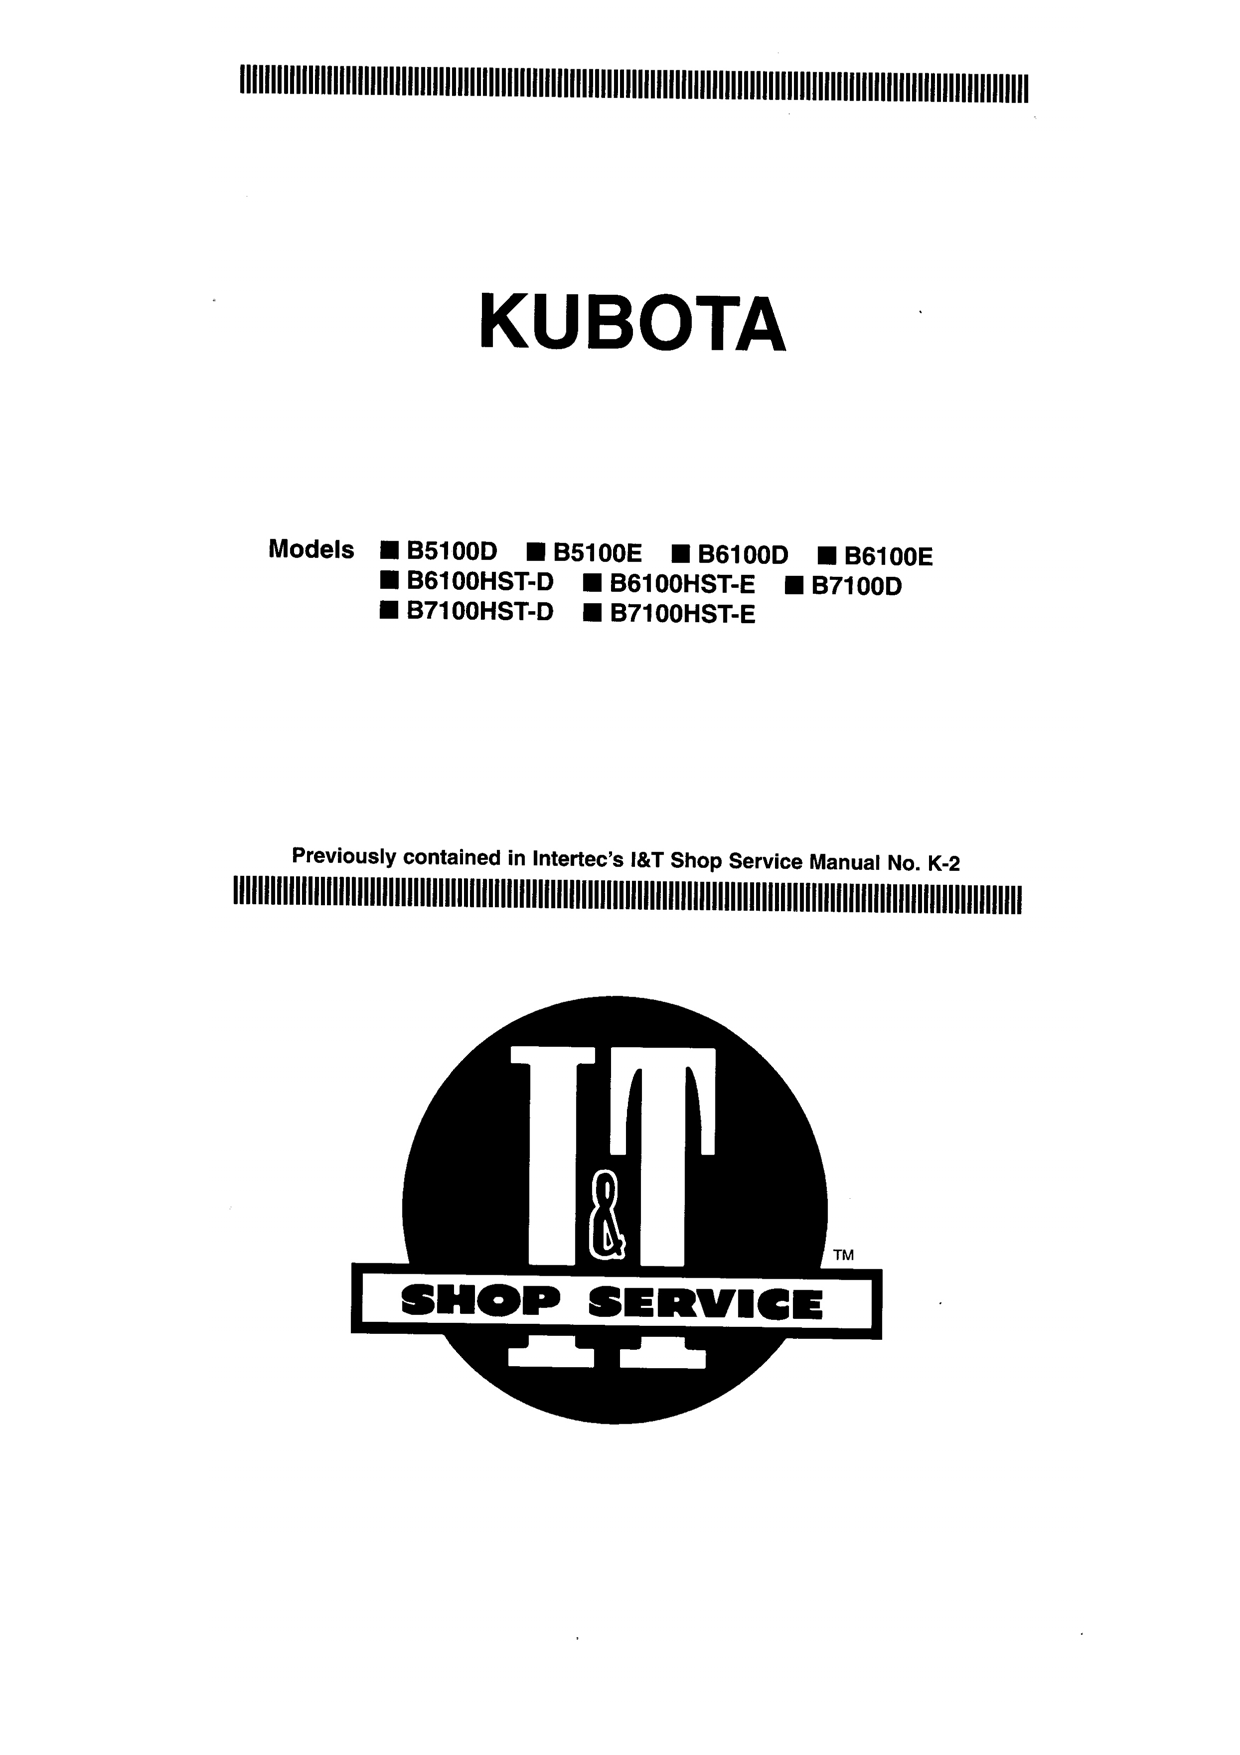 1976-1985 Kubota B5100D,  B5100E, B6100D, B6100E, B6100HST-D, B7100D, B7100HST-D, B7100HST-E manual Preview image 1